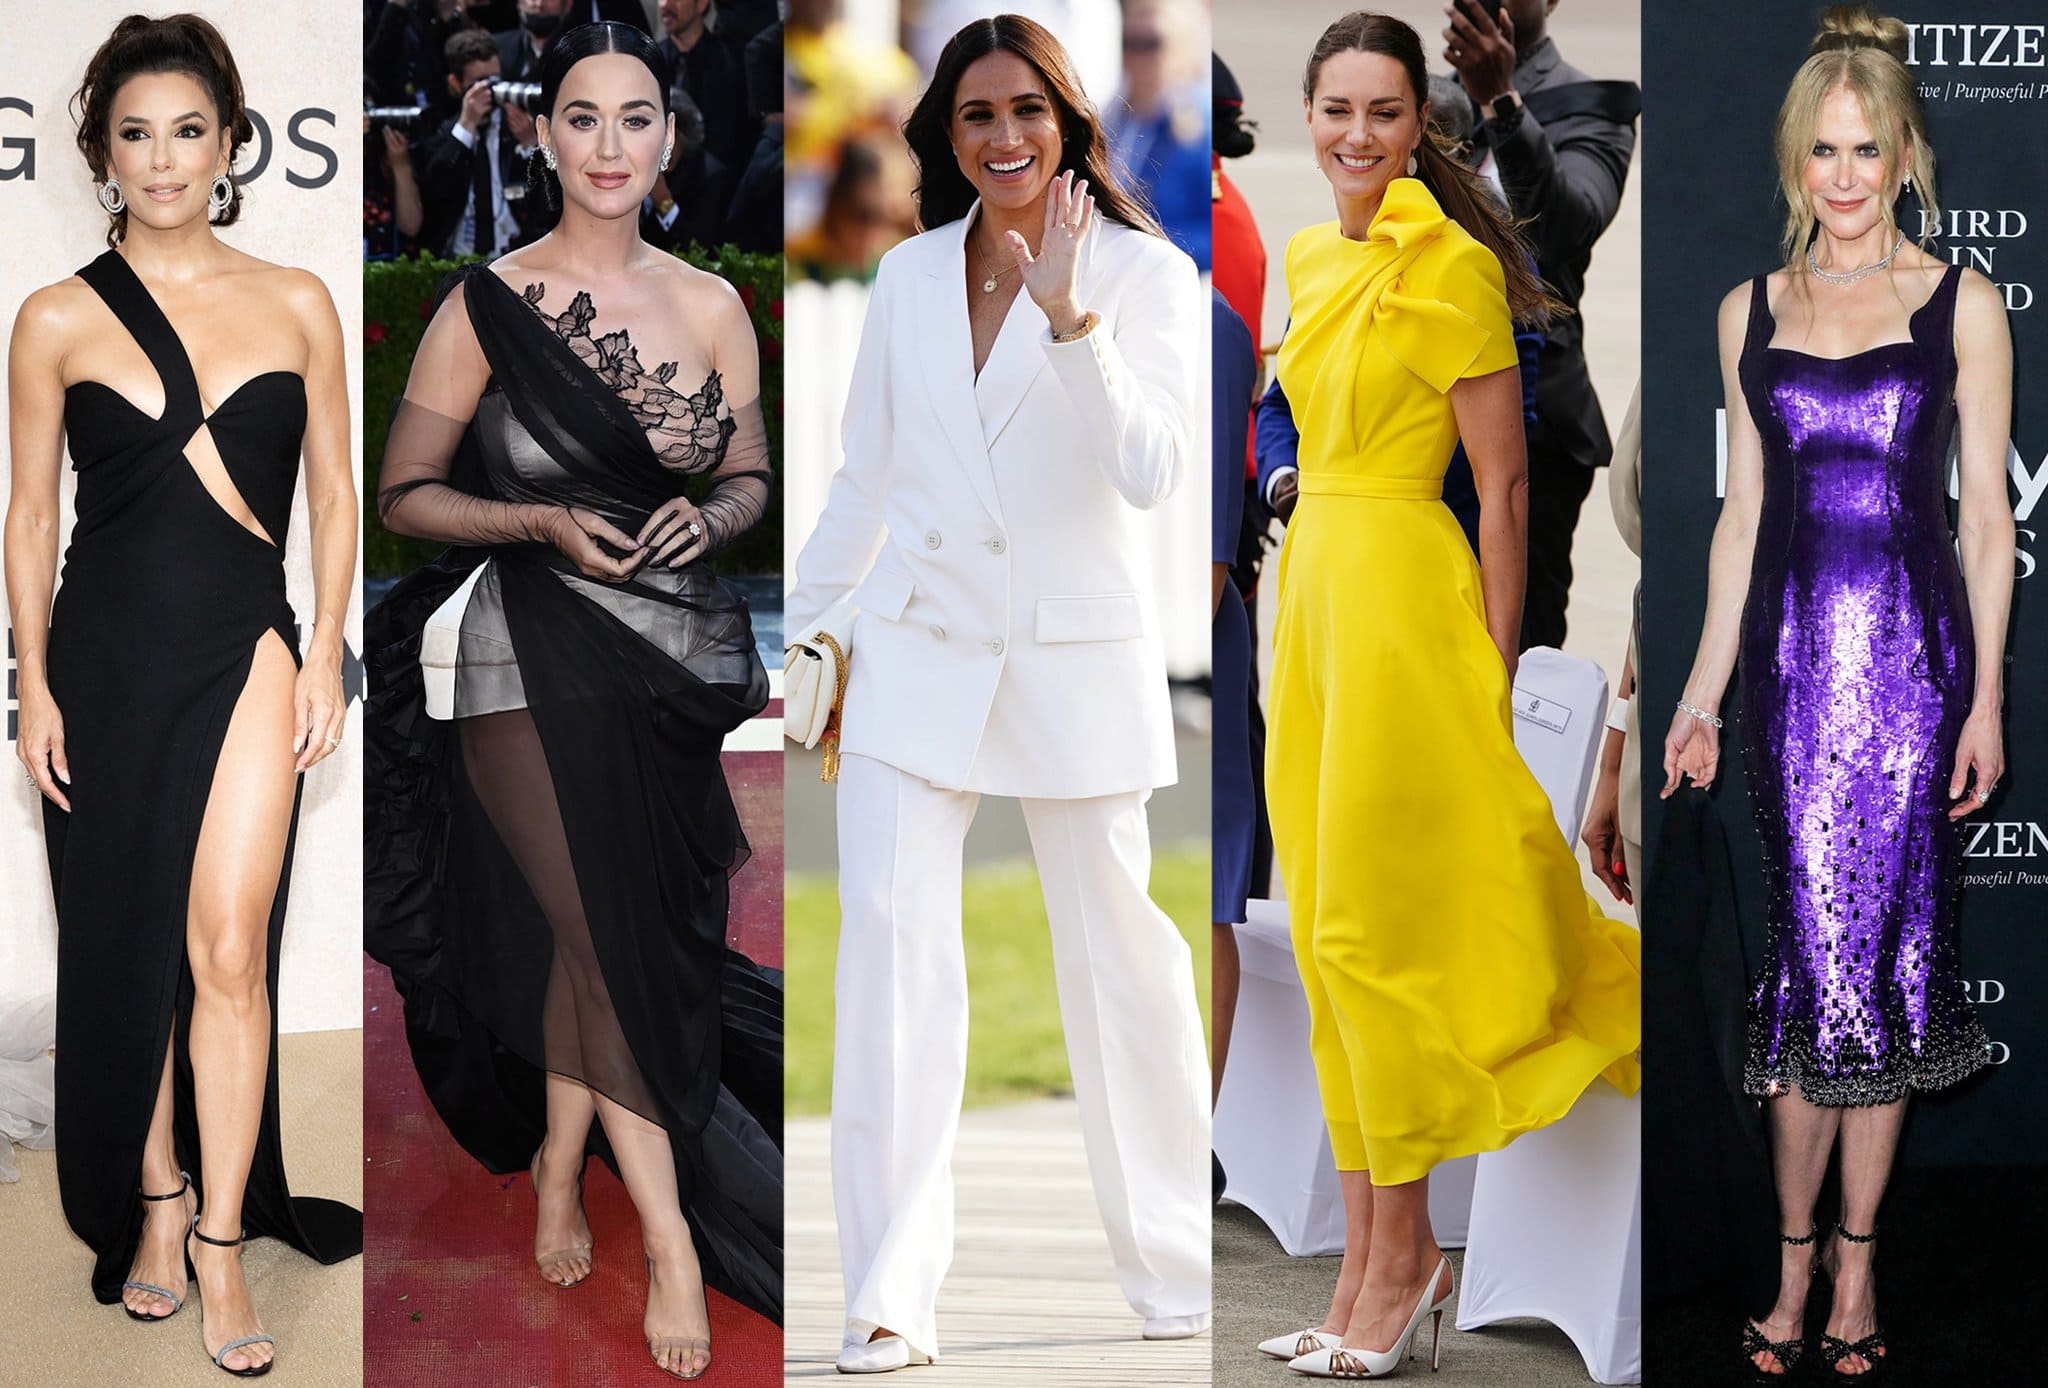 Eva Longoria, Katy Perry, Duchess of Sussex Meghan Markle, Duchess of Cambridge Kate Middleton, and Nicole Kidman wearing Aquazzura heels